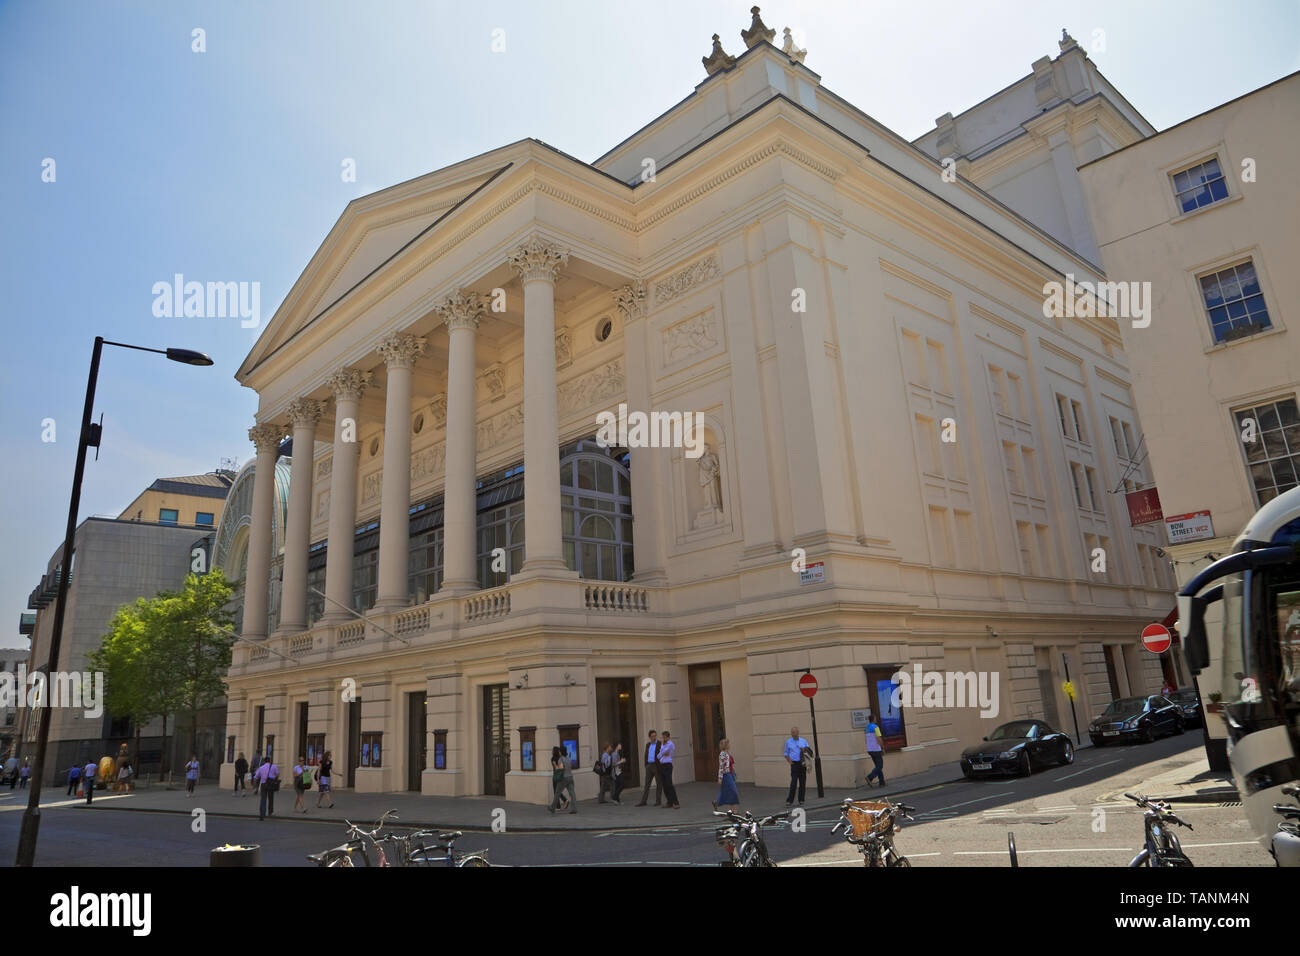 Le Royal Opera House Covent Garden, Londres Banque D'Images